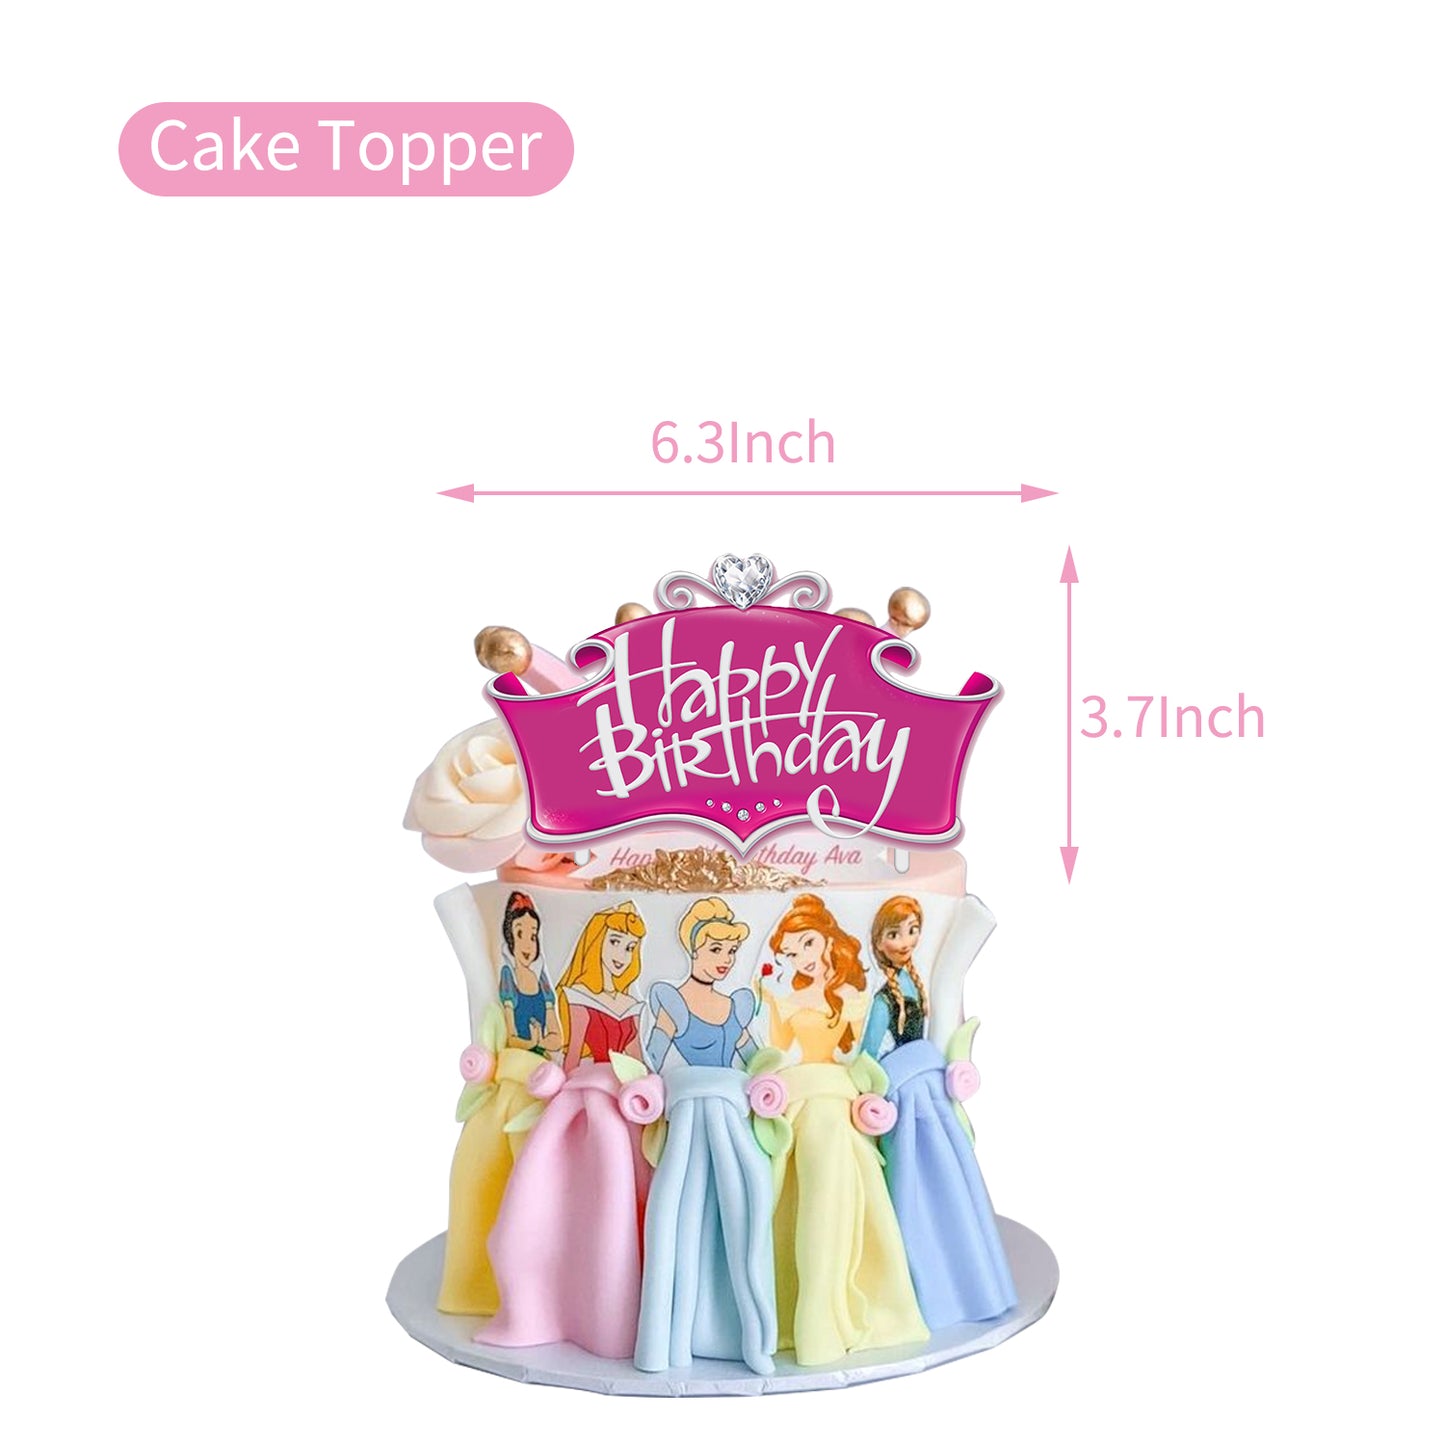 Disney Princess Birthday Party Supplies